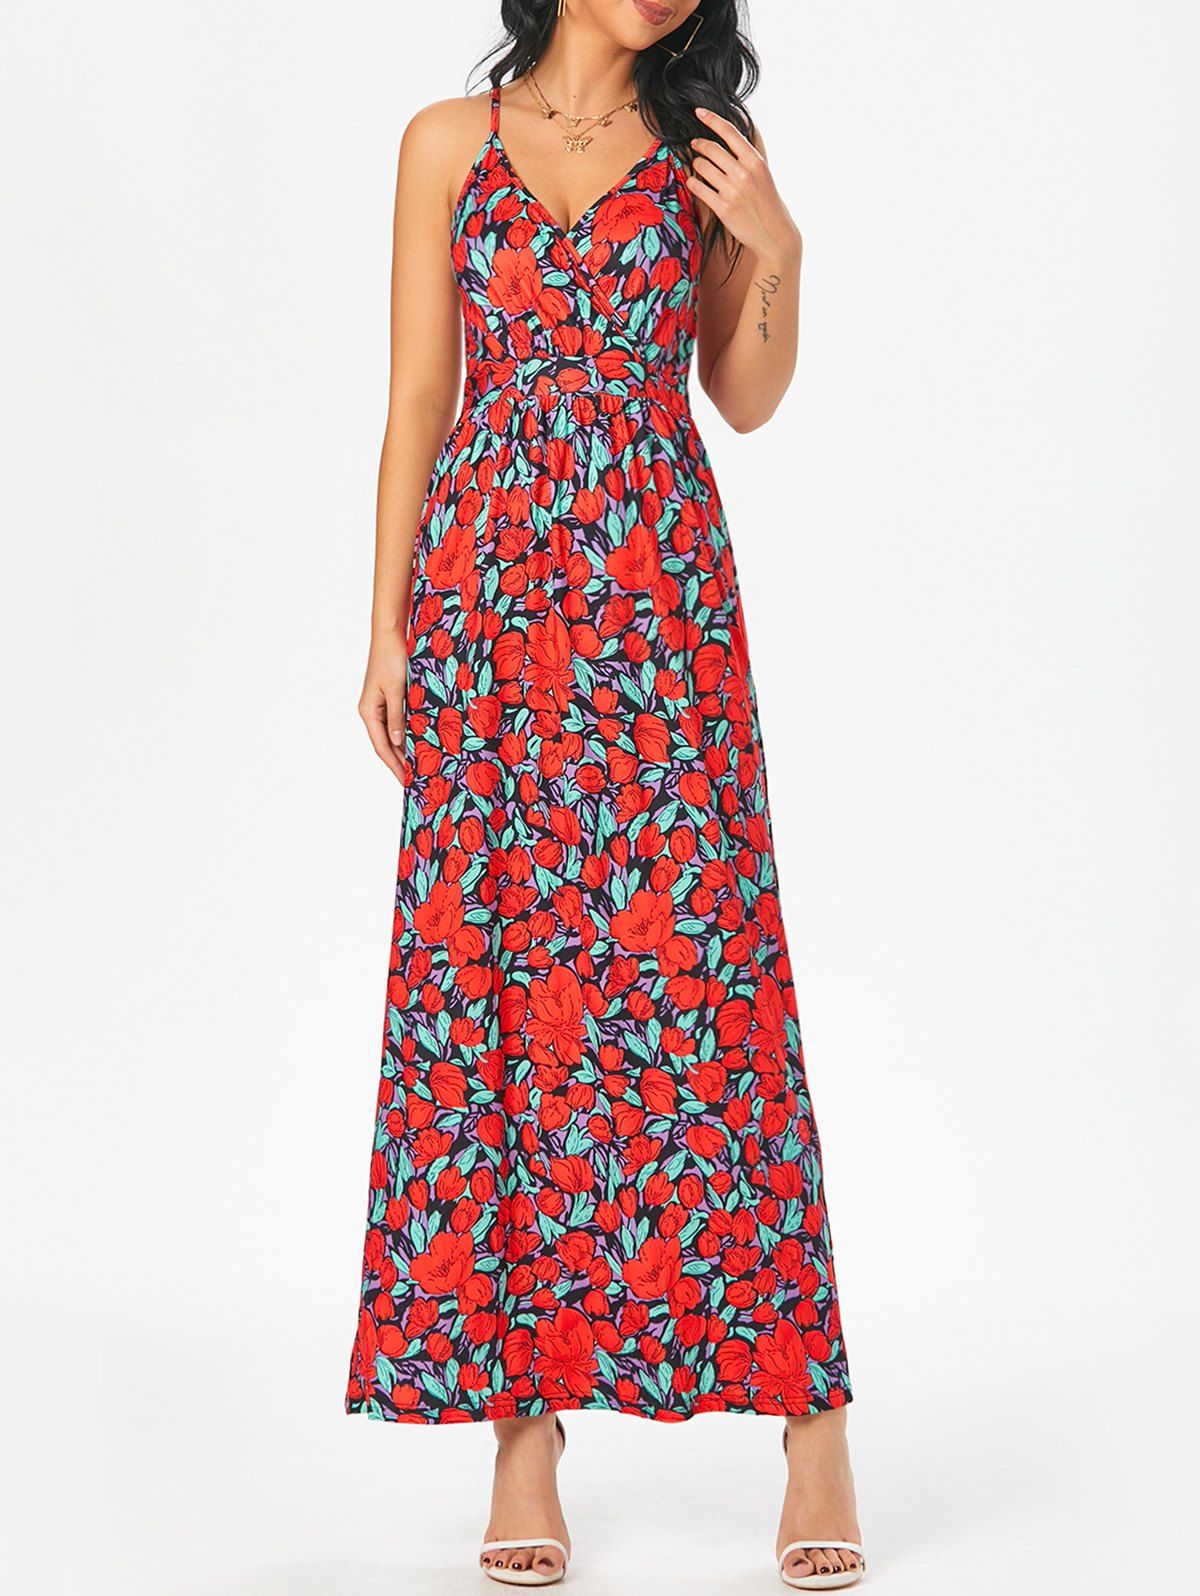 Flower Print Sundress Crisscross Vacation Maxi Dress - multicolor XL